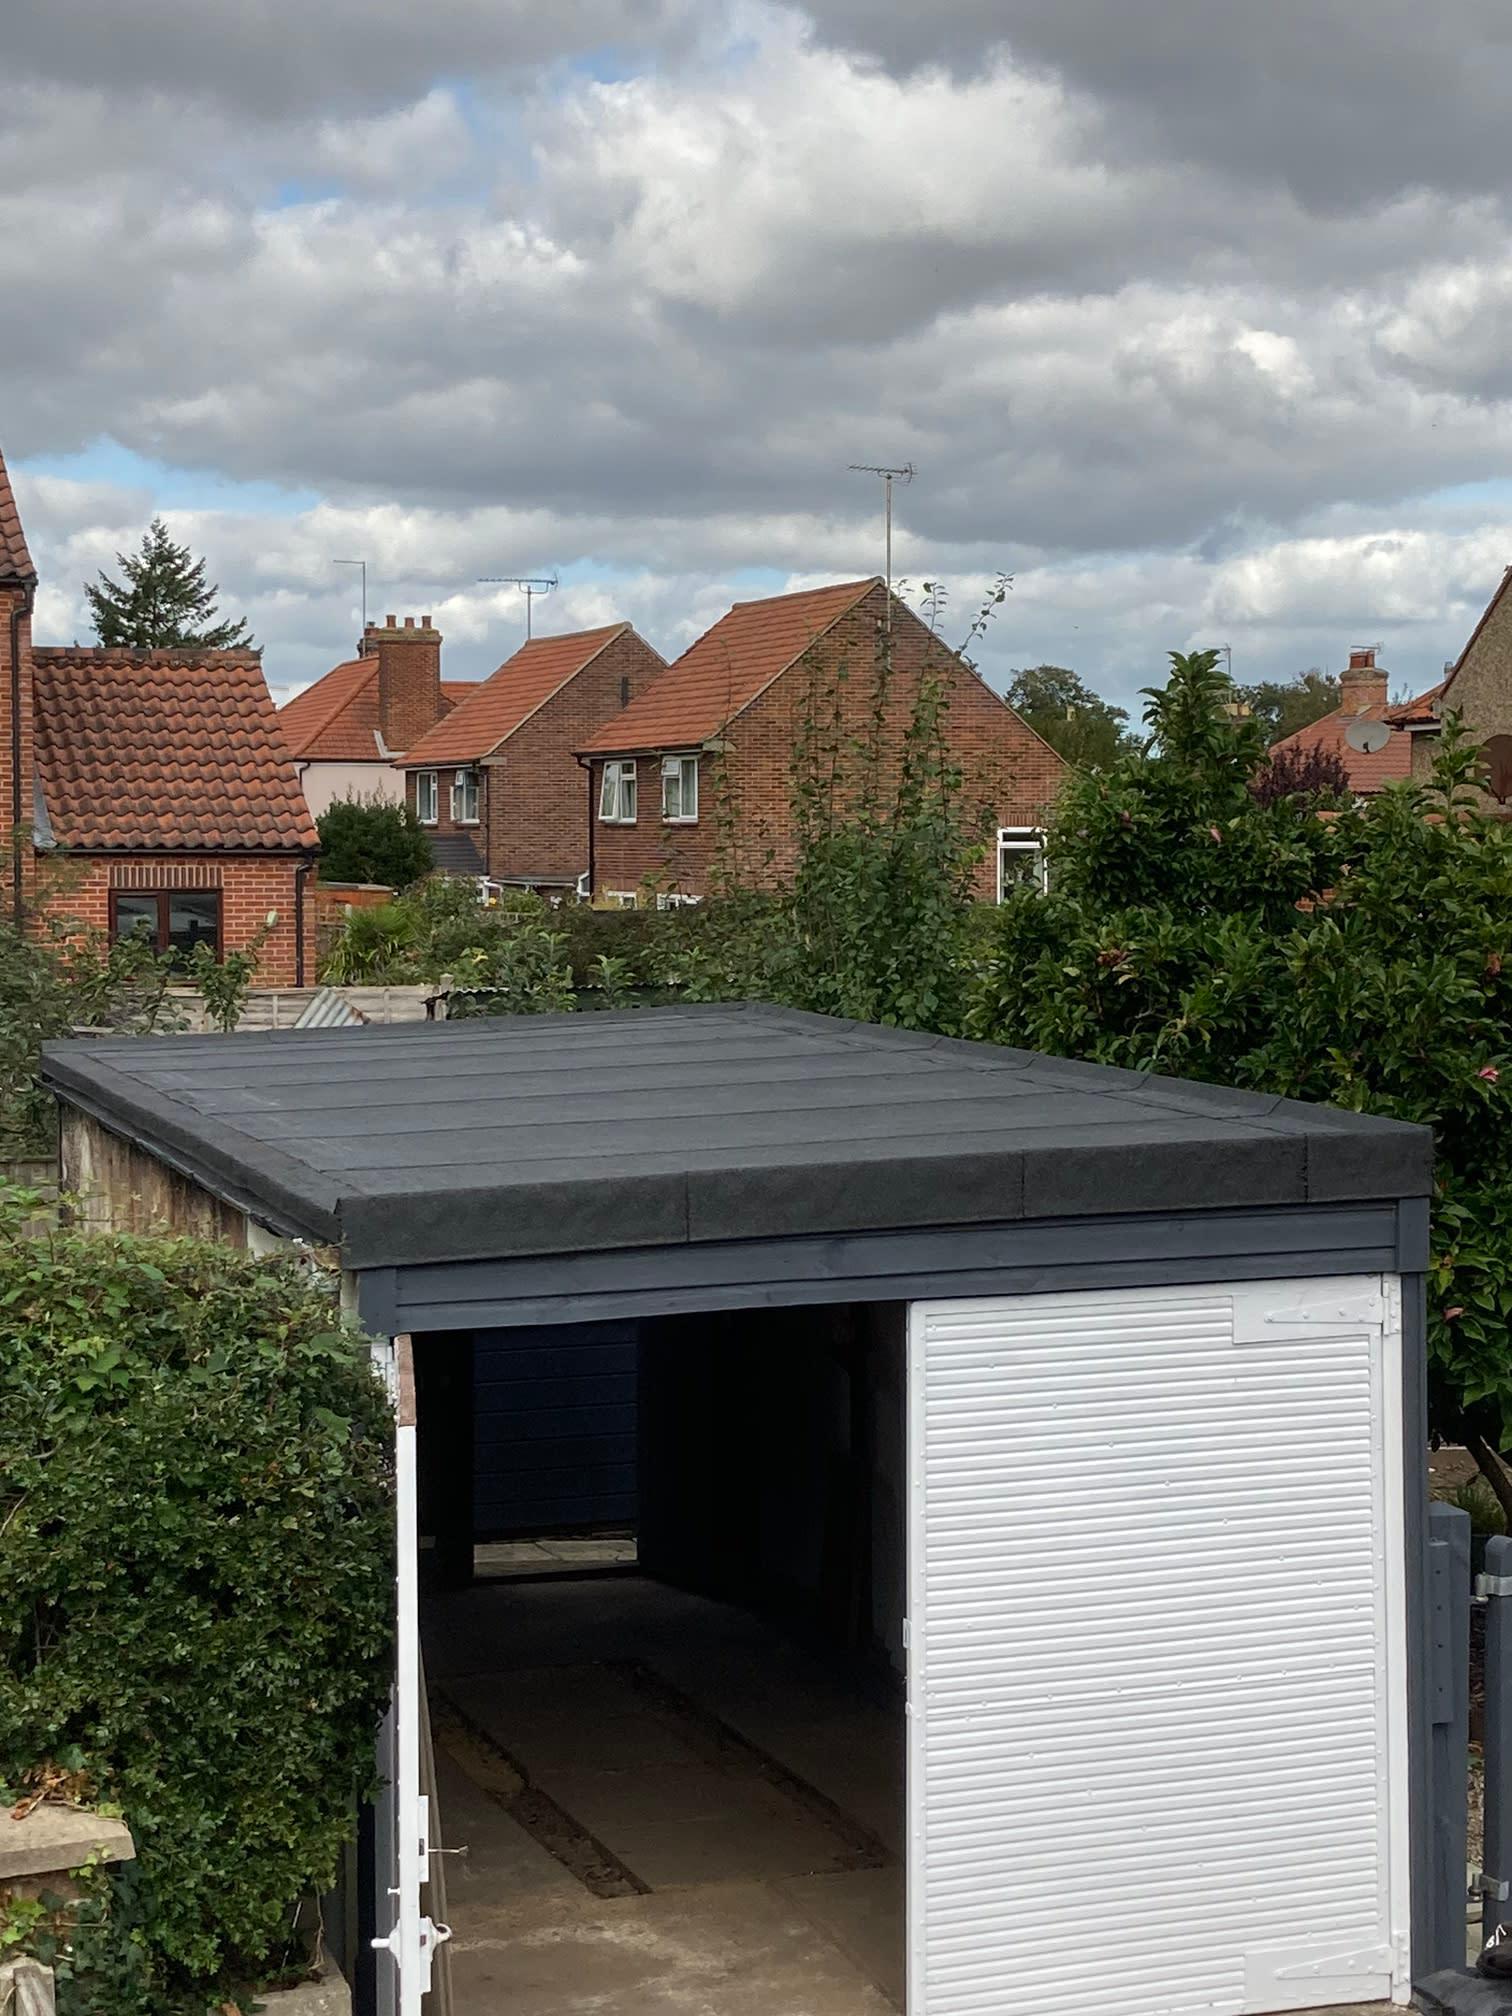 Boss Roofing Contractors Ltd Norwich 07587 264406